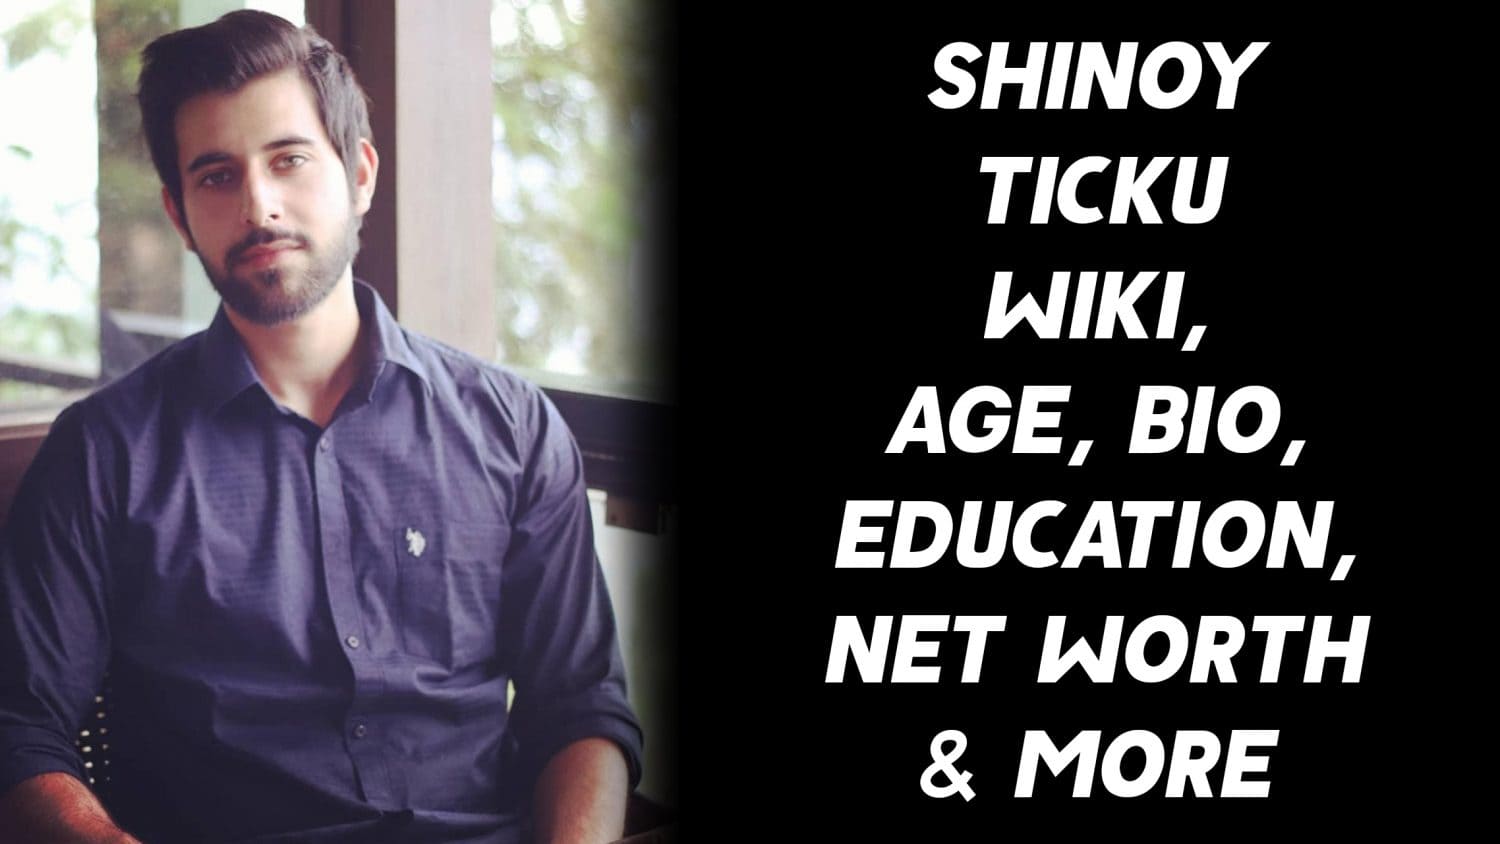 Shinoy Ticku Wiki, Age, Bio, Education, Net Worth & More 1